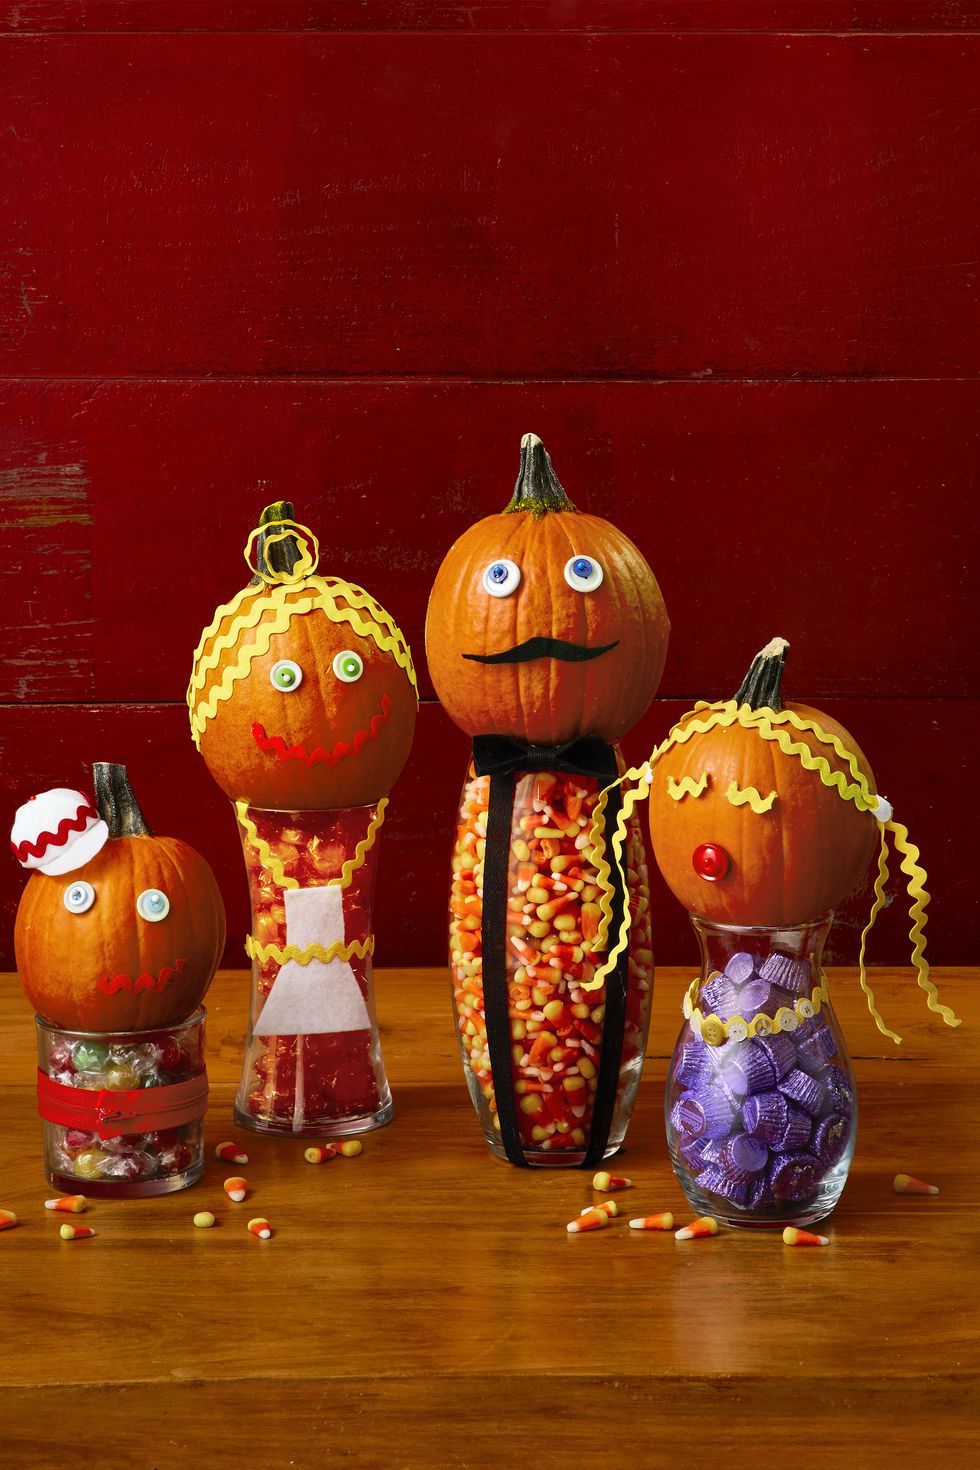 20 mini pumpkin decorating ideas To Make Your Home Festive